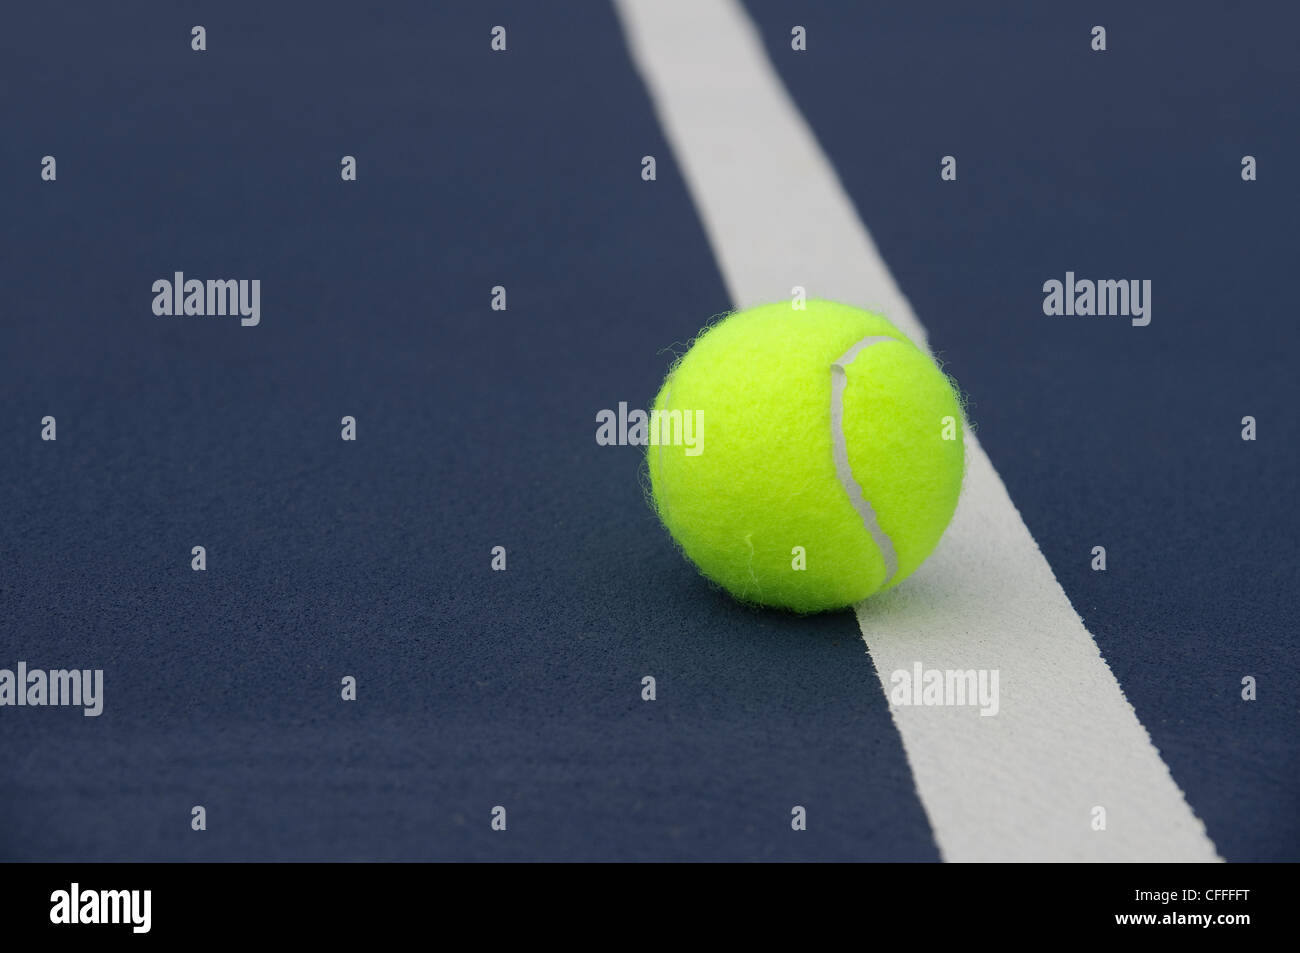 Tennis ball touching the line. Stock Photo